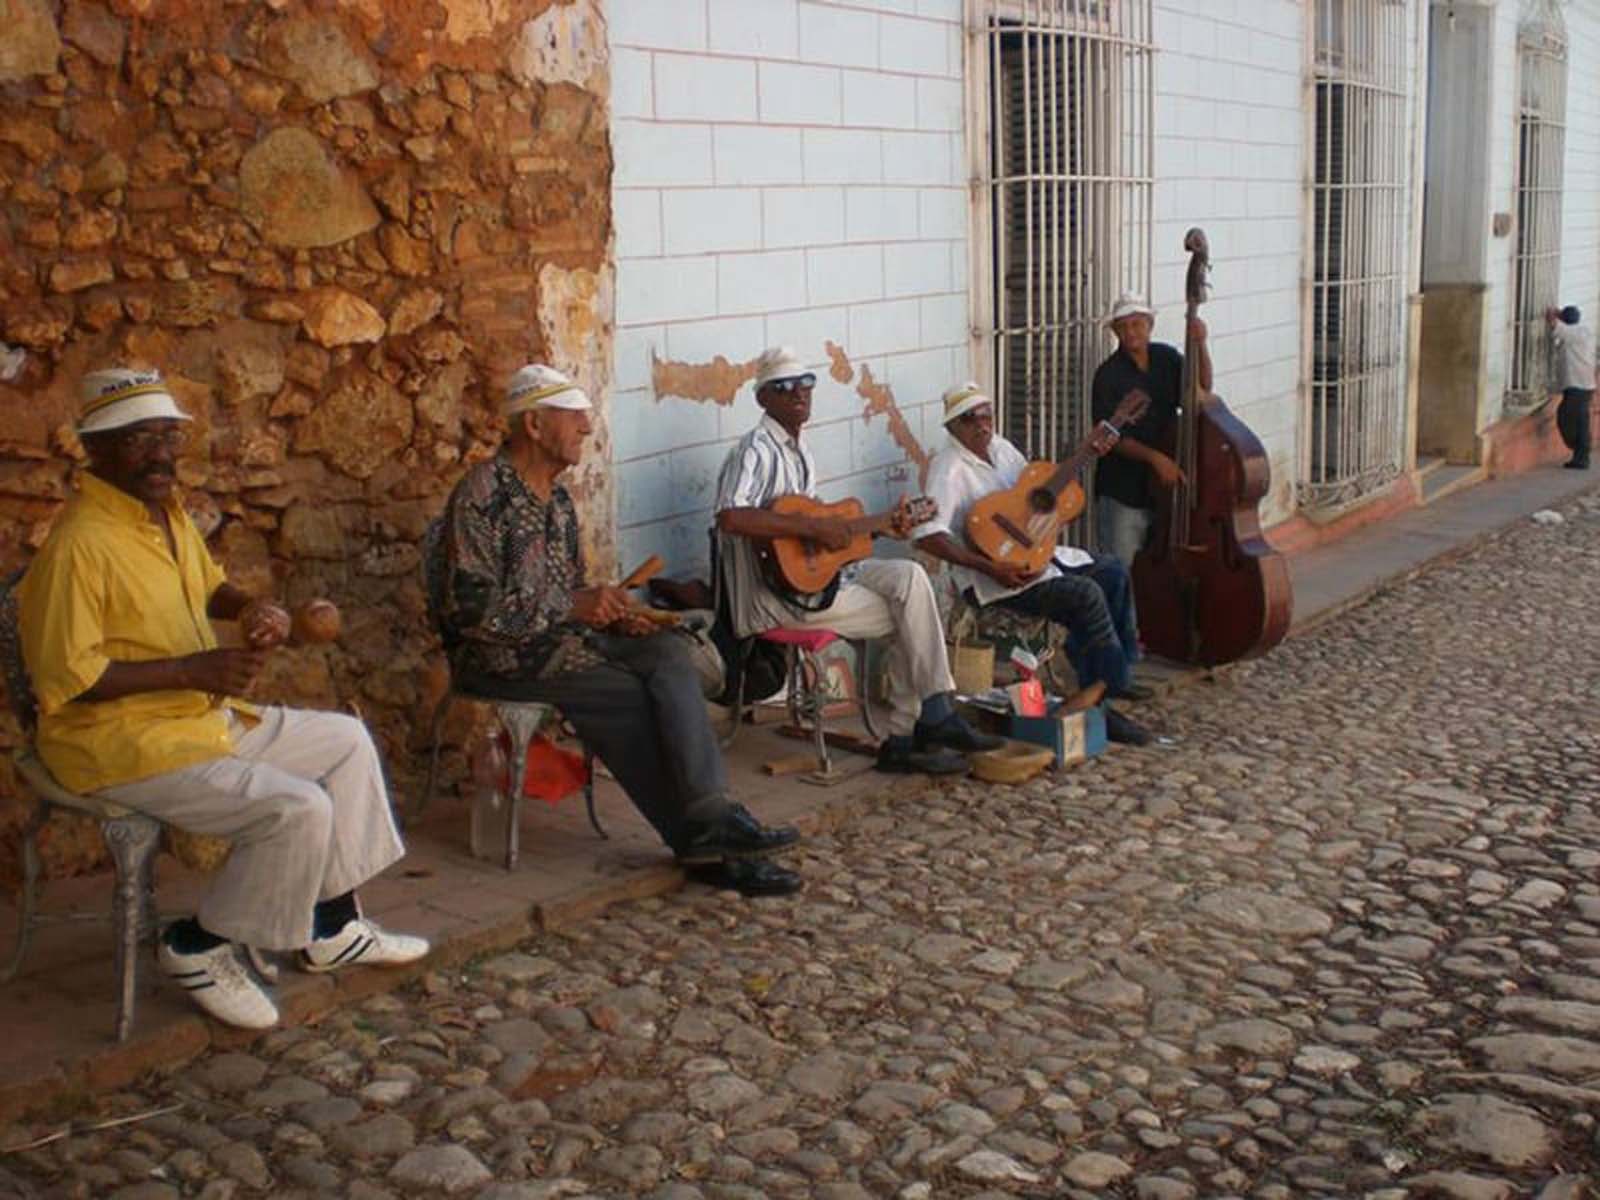 enjoy the street musicians things to do in Havana Cuba